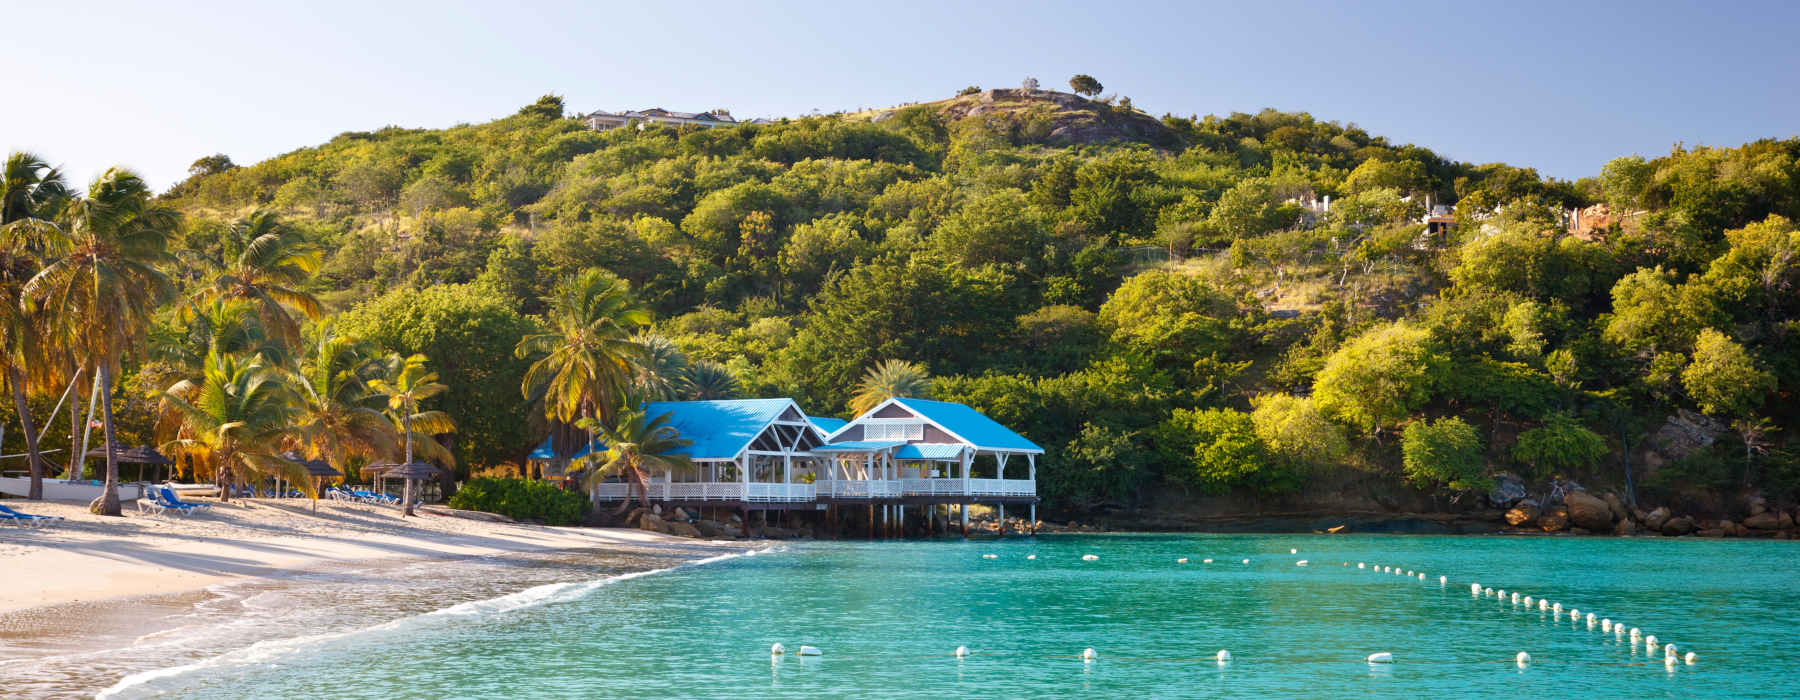 Antigua and Barbuda<br class="hidden-md hidden-lg" /> Tours